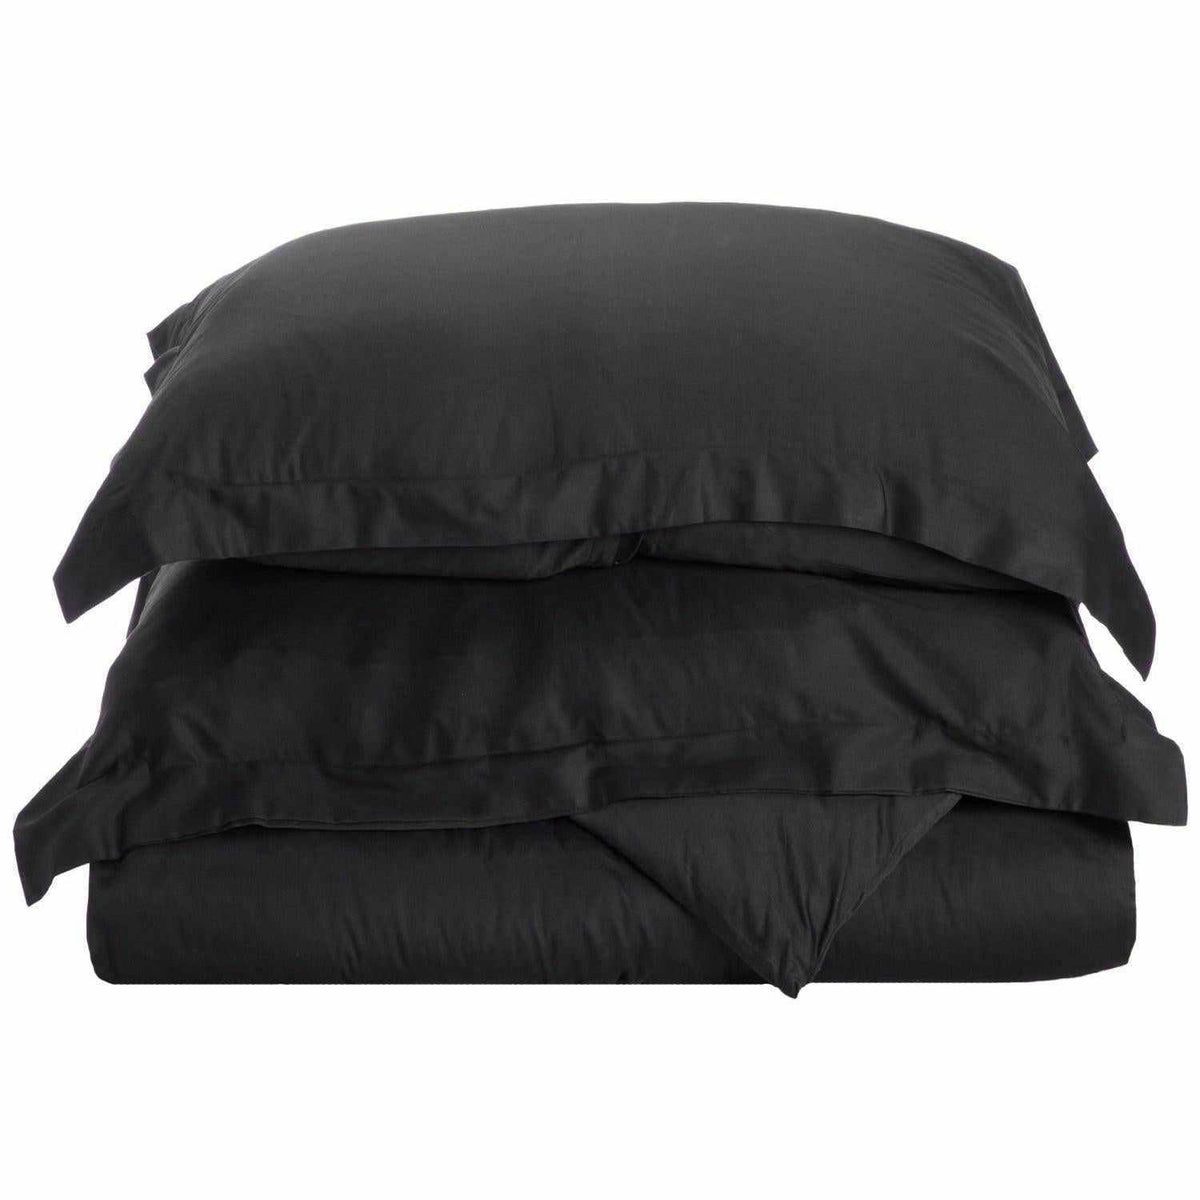  Superior Egyptian Cotton 700 Thread Count Breathable 3-Piece Duvet Cover Bedding Set - Black